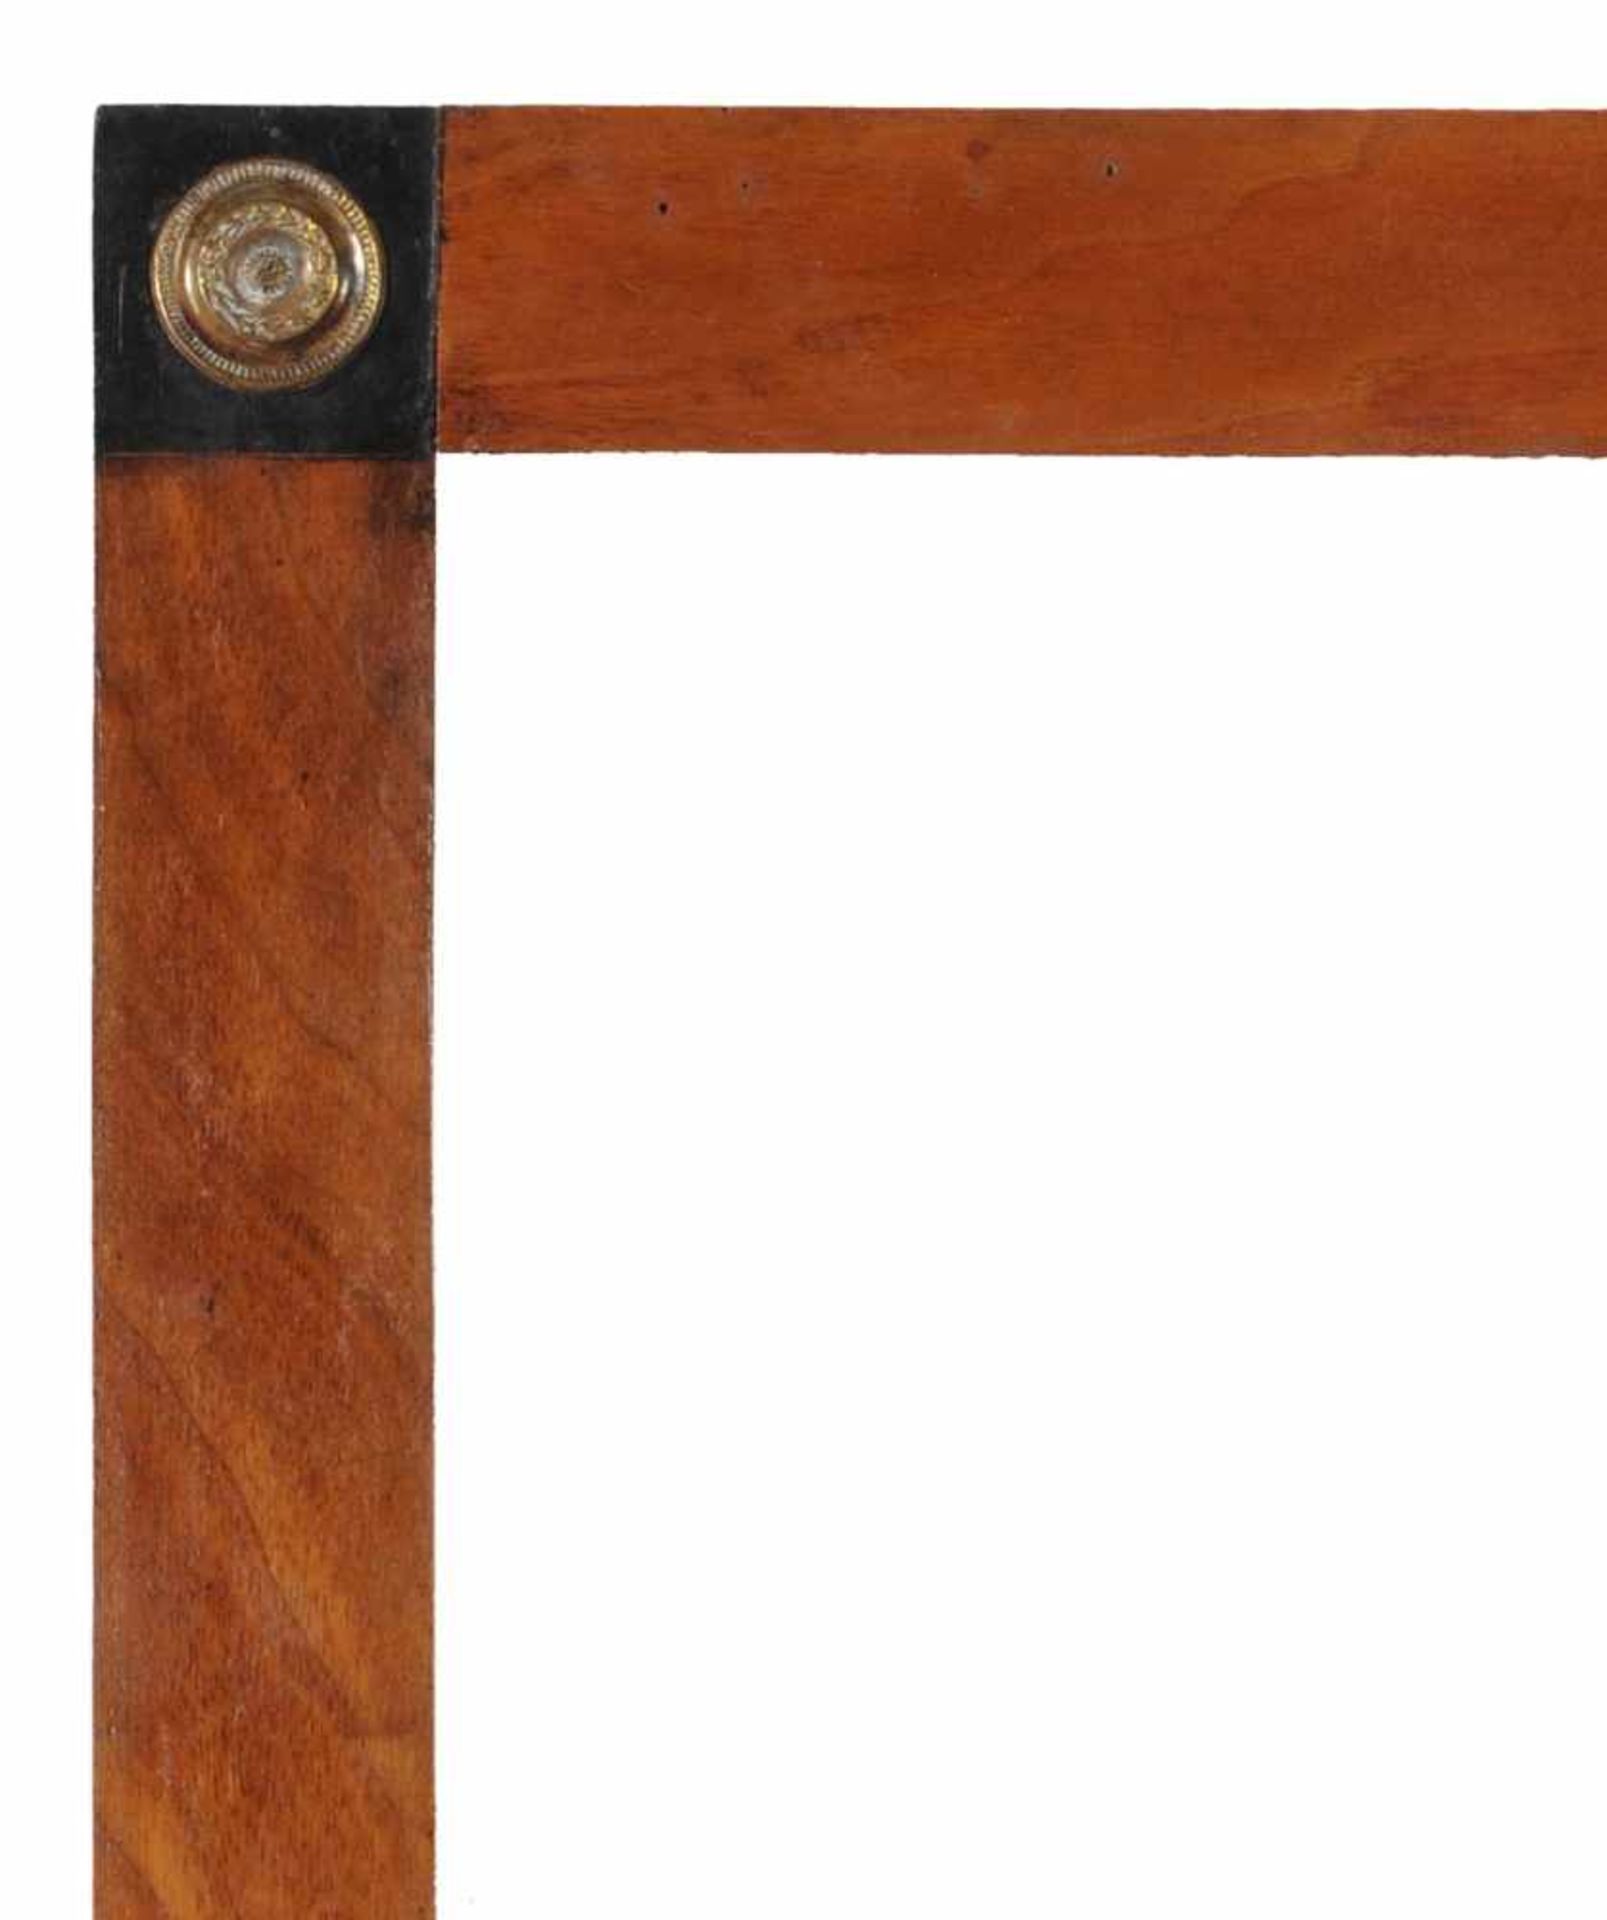 Klassizistischer Plattenrahmen mit Messing-Medaillons. Frühes 18. Jh.Holz, mit transparentem Überzug - Bild 2 aus 3